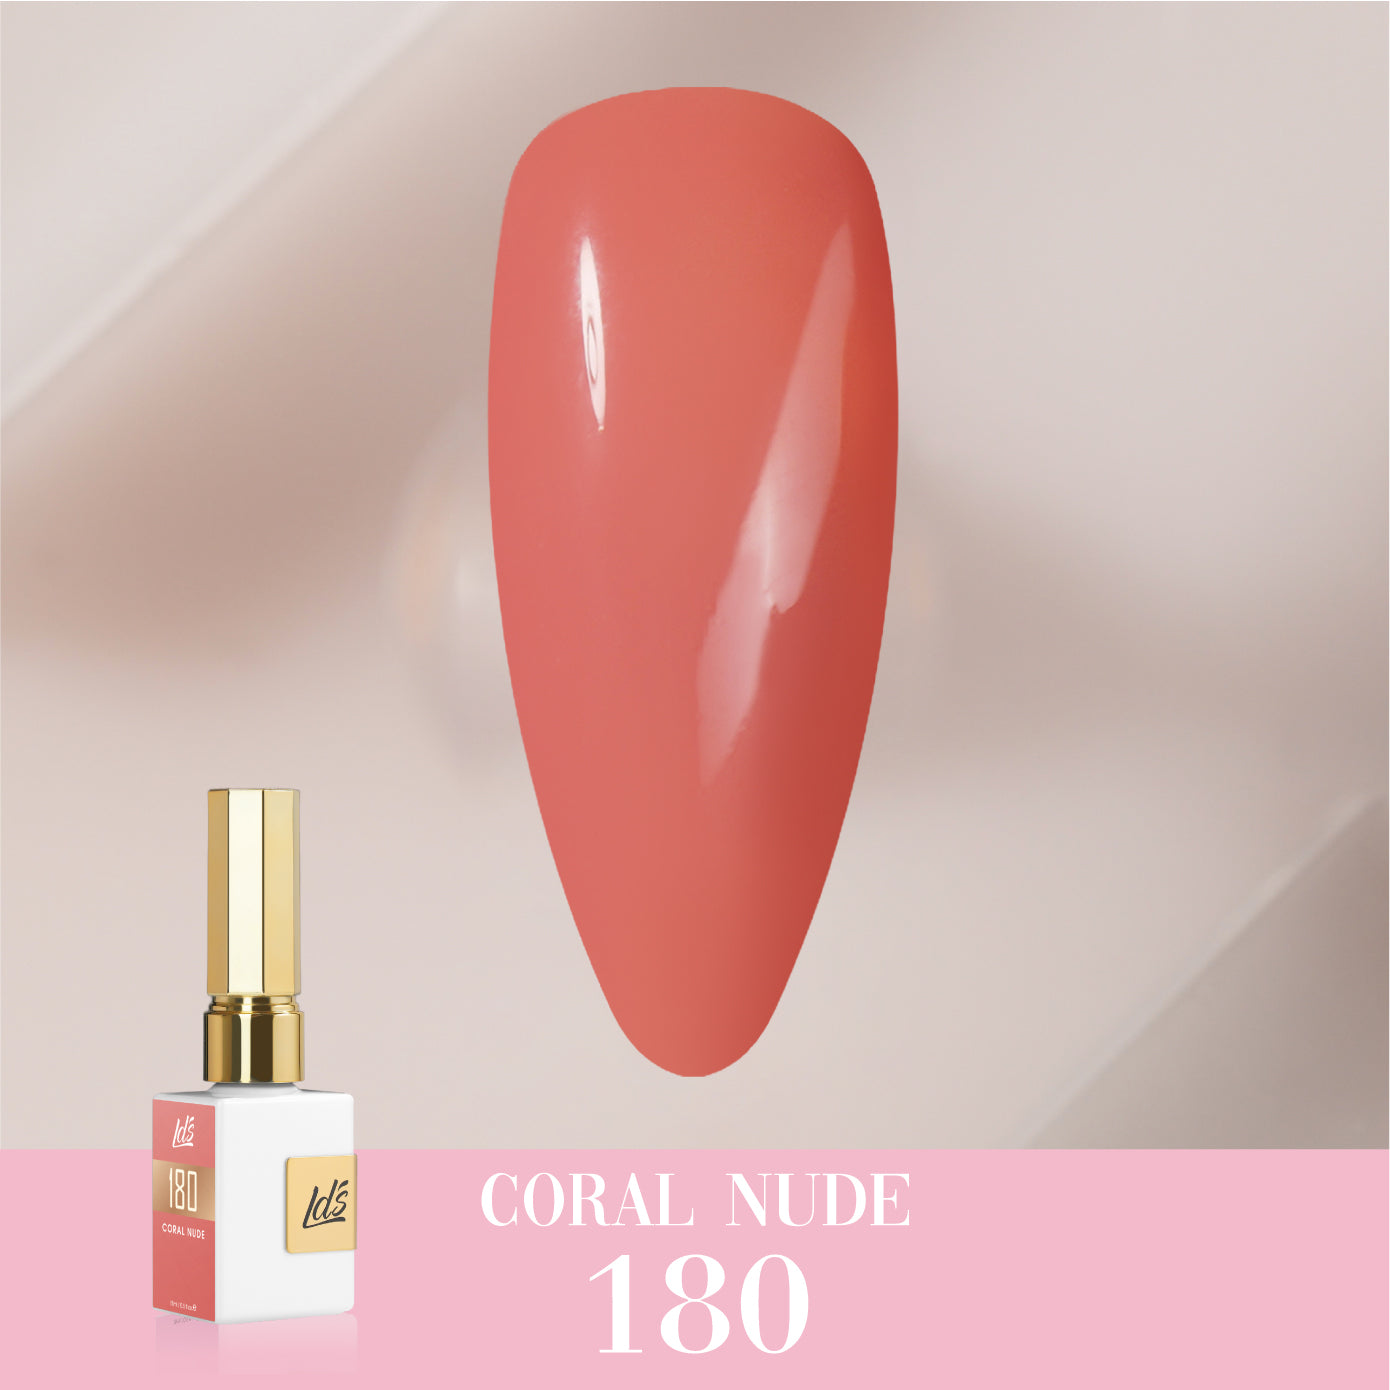 LDS Color Craze Collection - 180 Coral Nude - Gel Polish 0.5oz